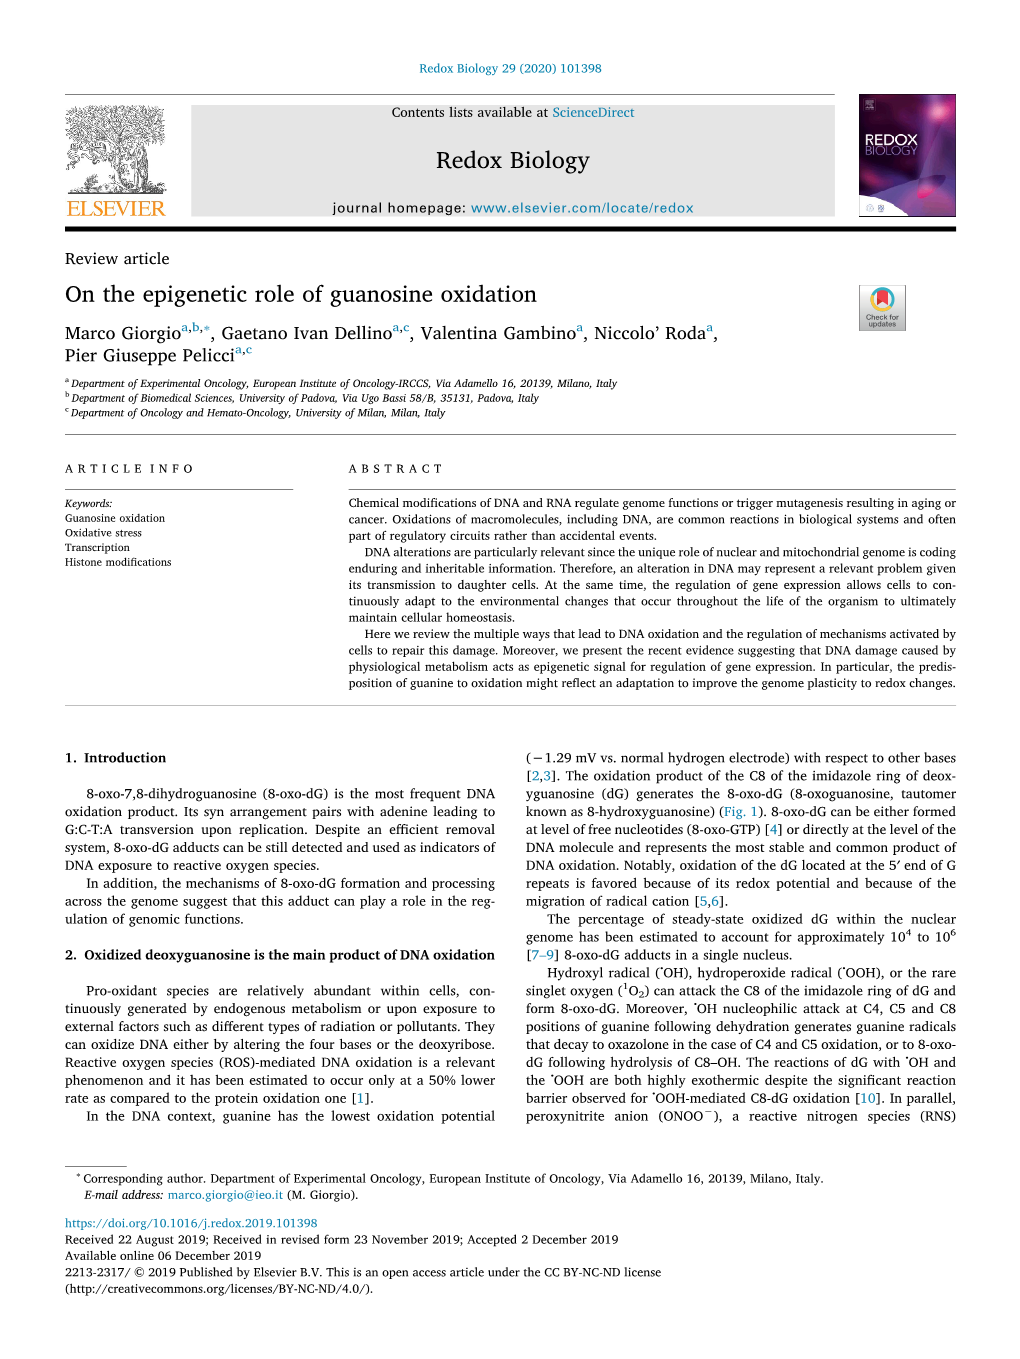 On the Epigenetic Role of Guanosine Oxidation